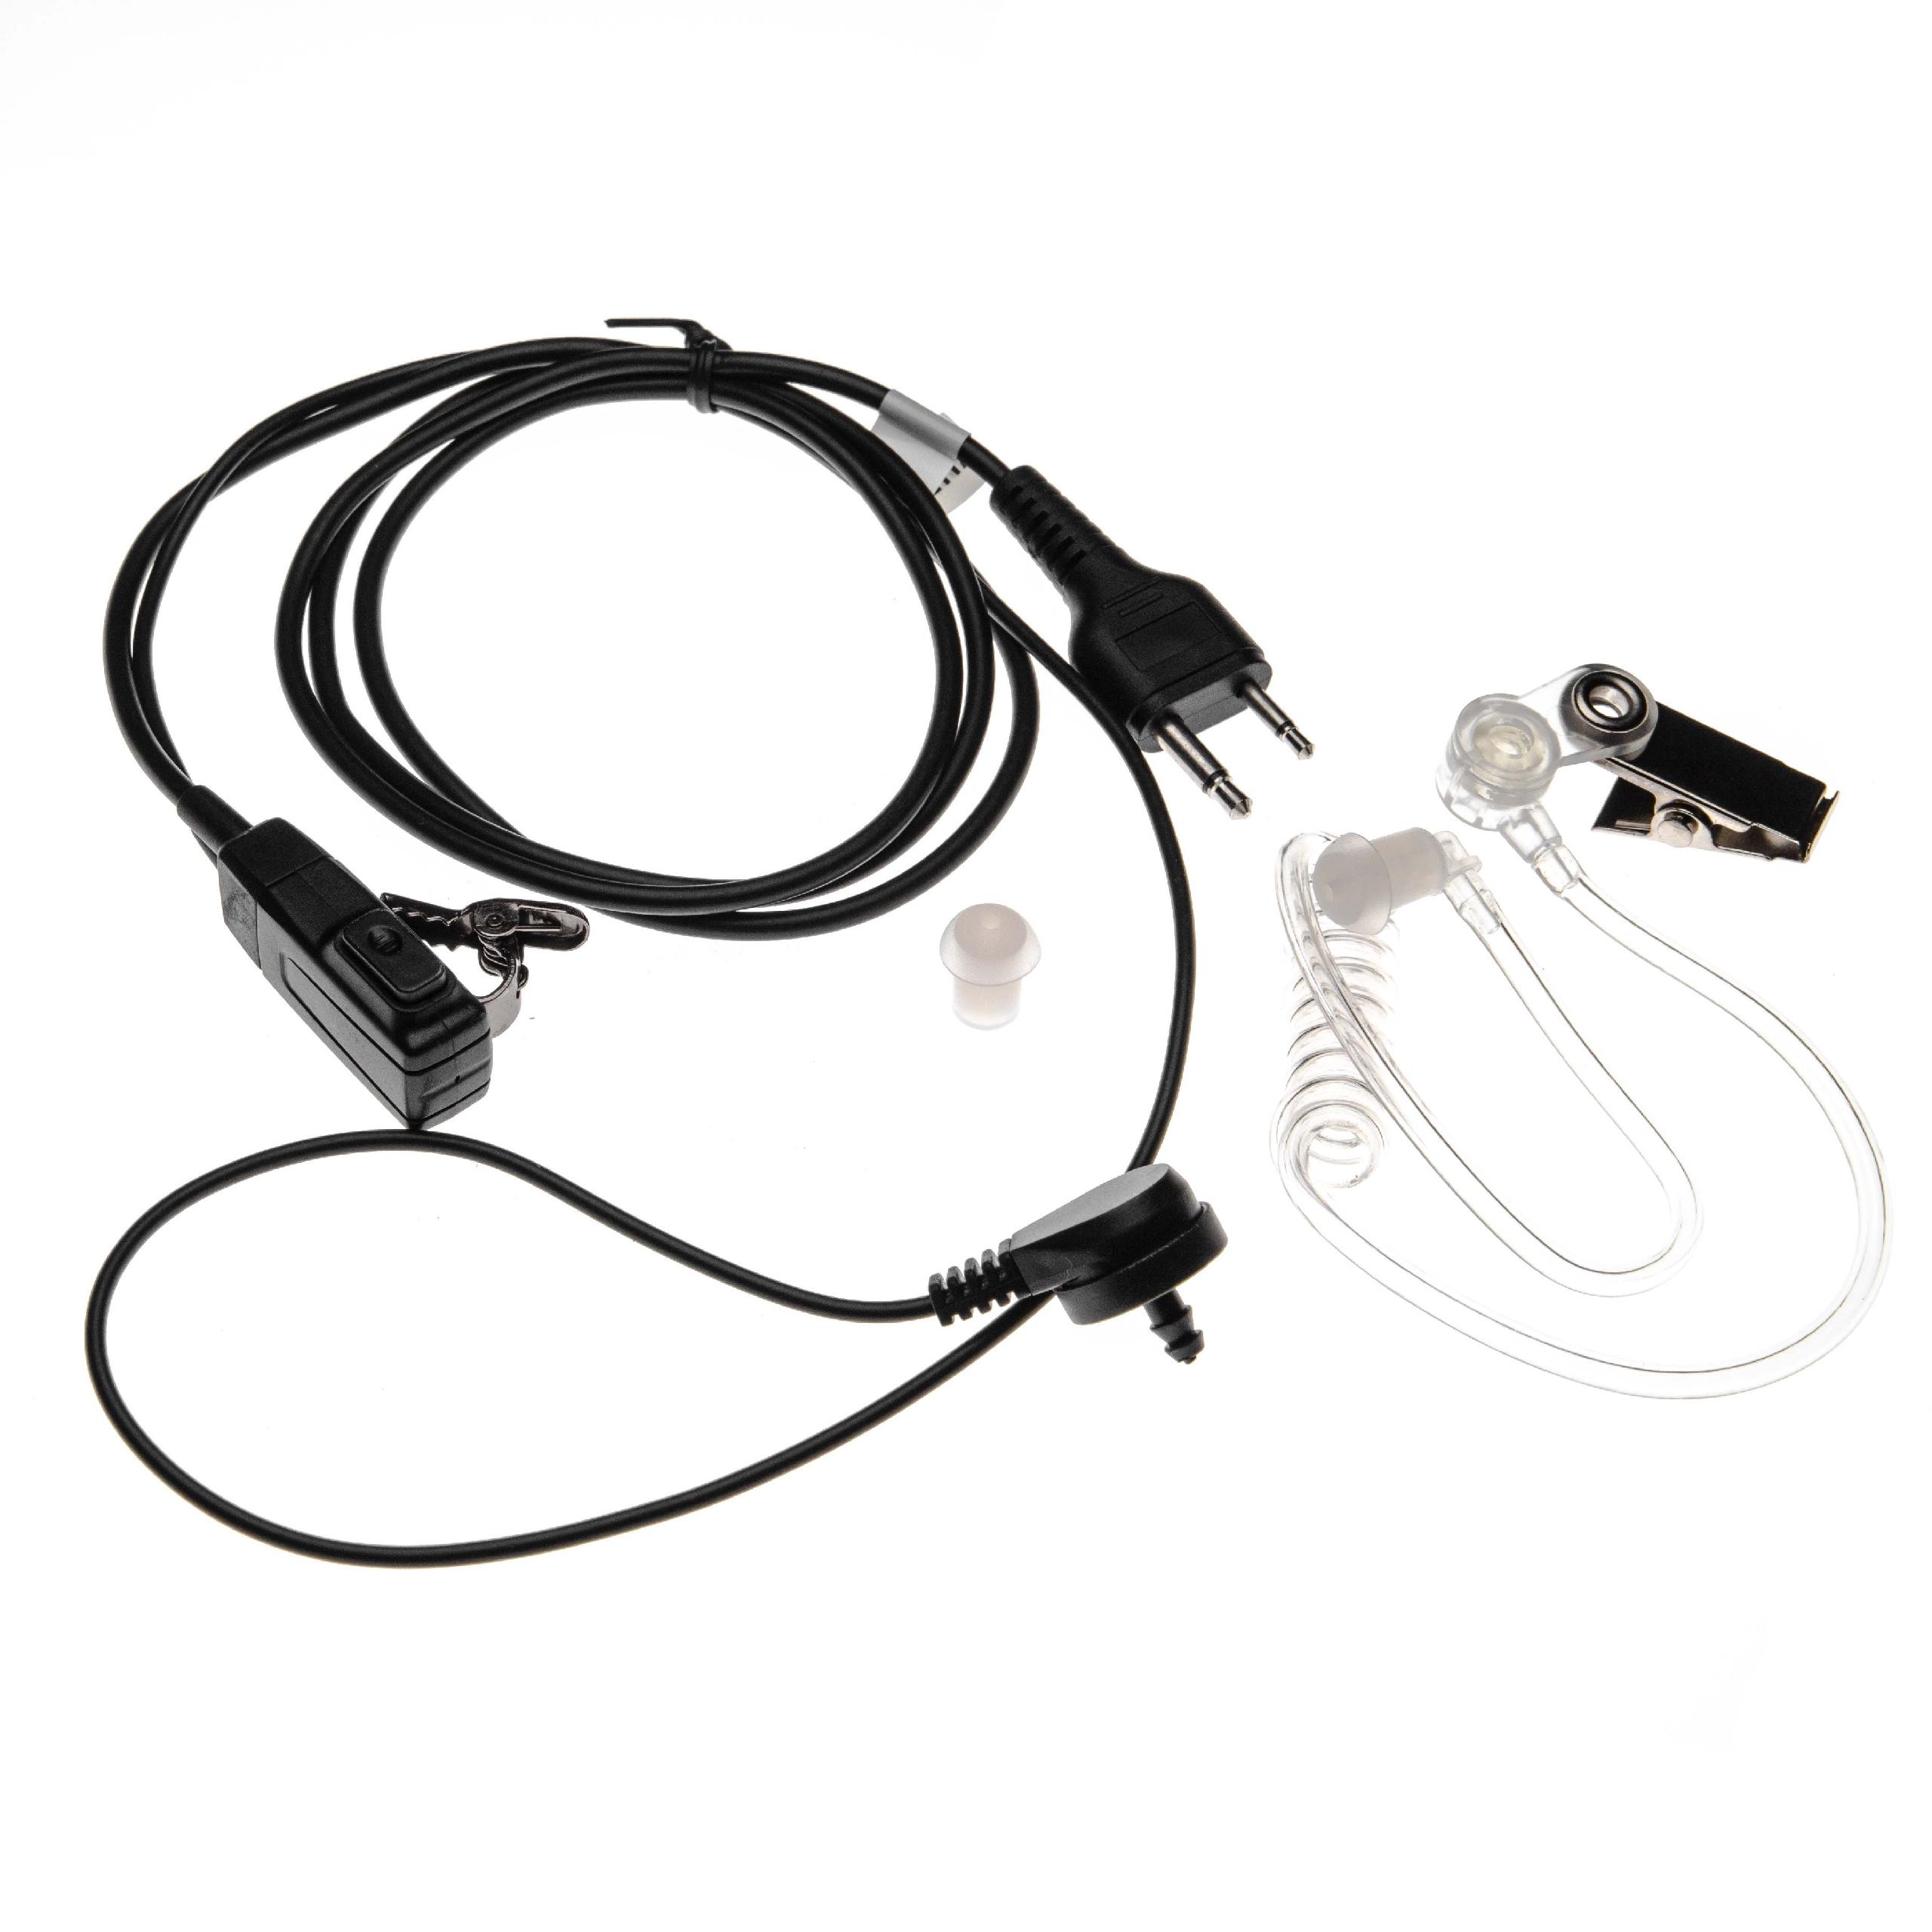 Security headset per ricetrasmittente Icom IC-24AT - trasparente / nero + microfono push-to-talk + supporto a 